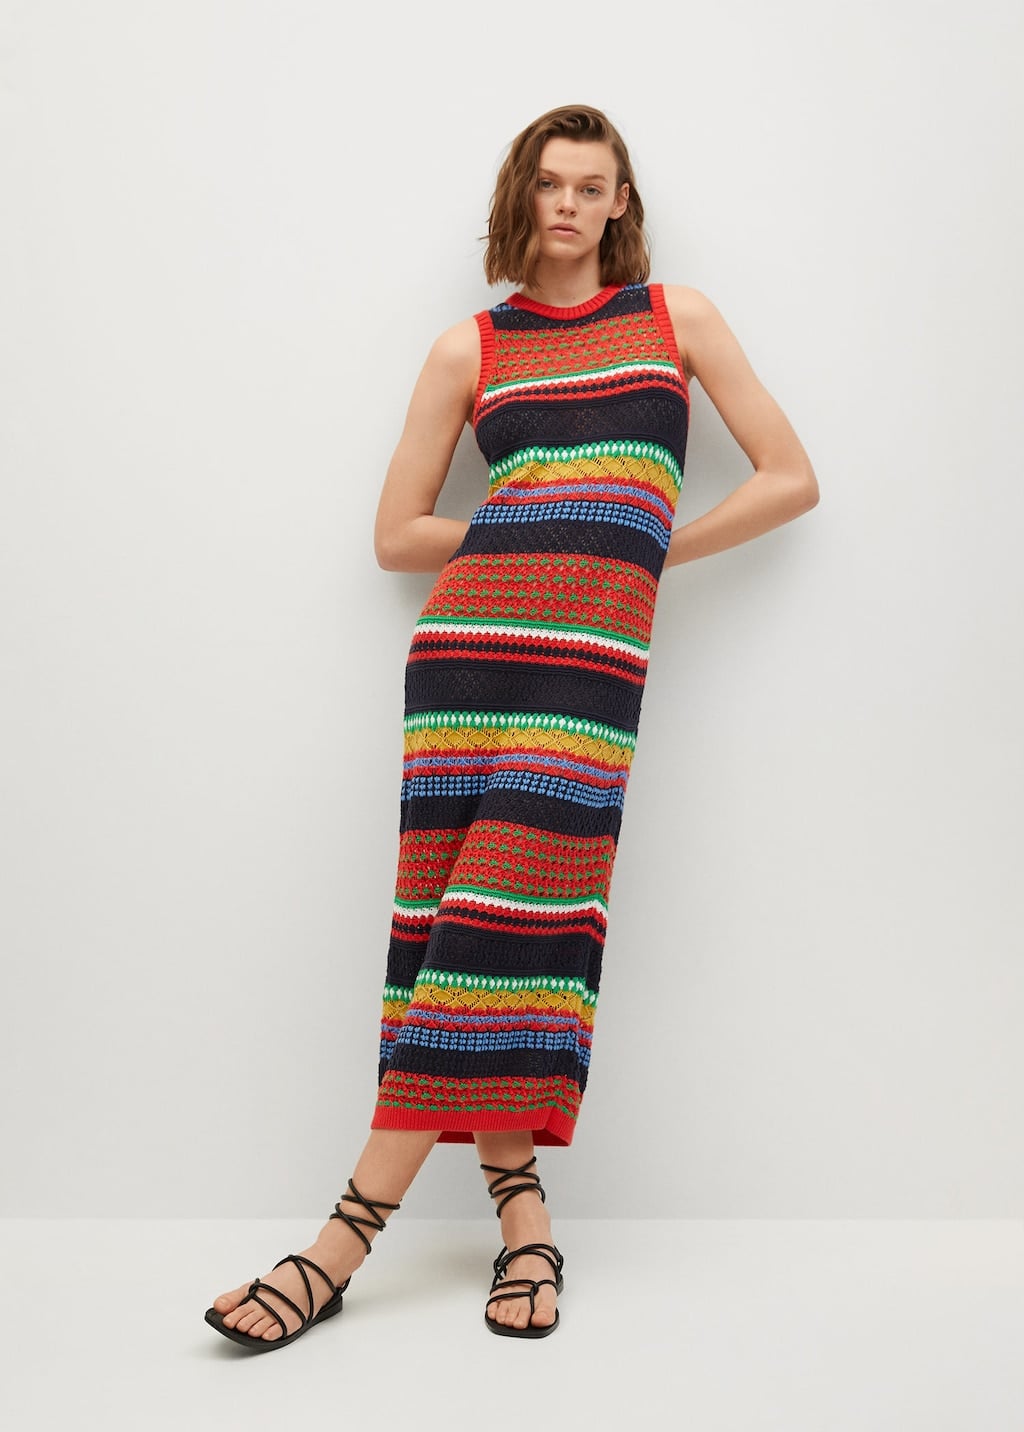 crtač pretpostavka rebro  Mango Knit Cotton-Blend Dress | The 2022 Trends You Can Start Wearing Now |  POPSUGAR Fashion Photo 25